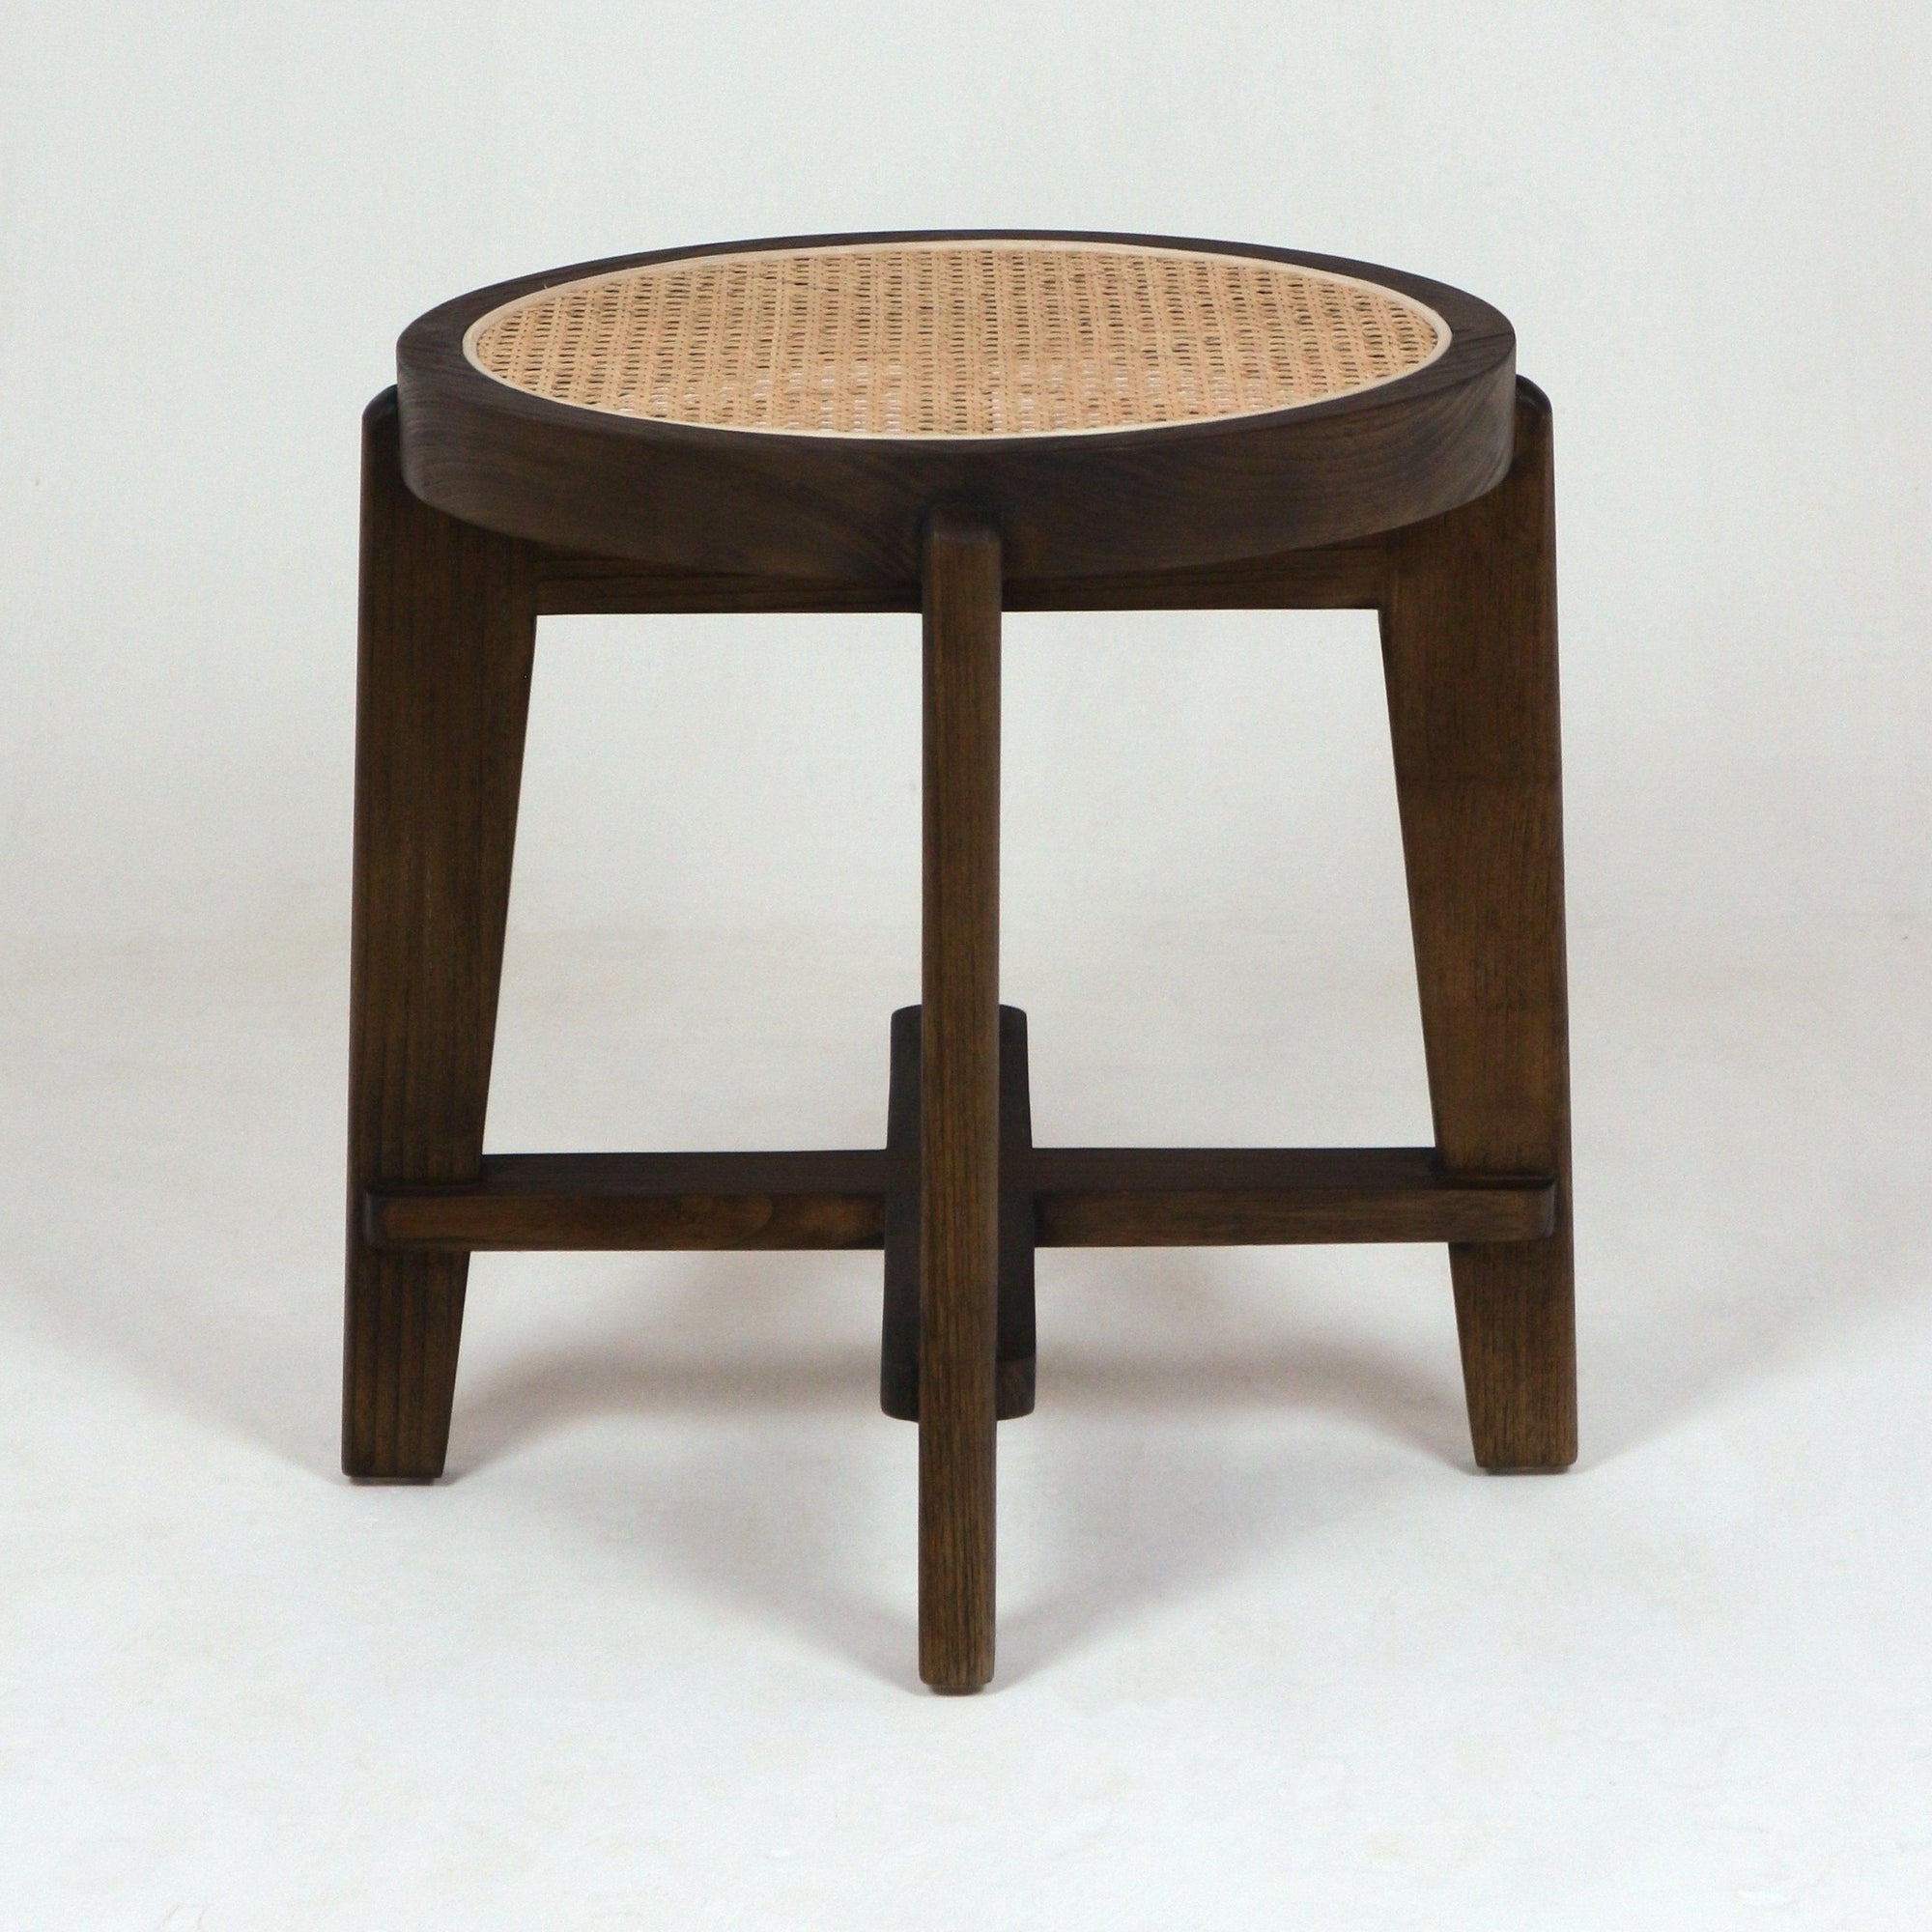 Pierre Jeanneret Stool or Side Table - INTERIORTONIC